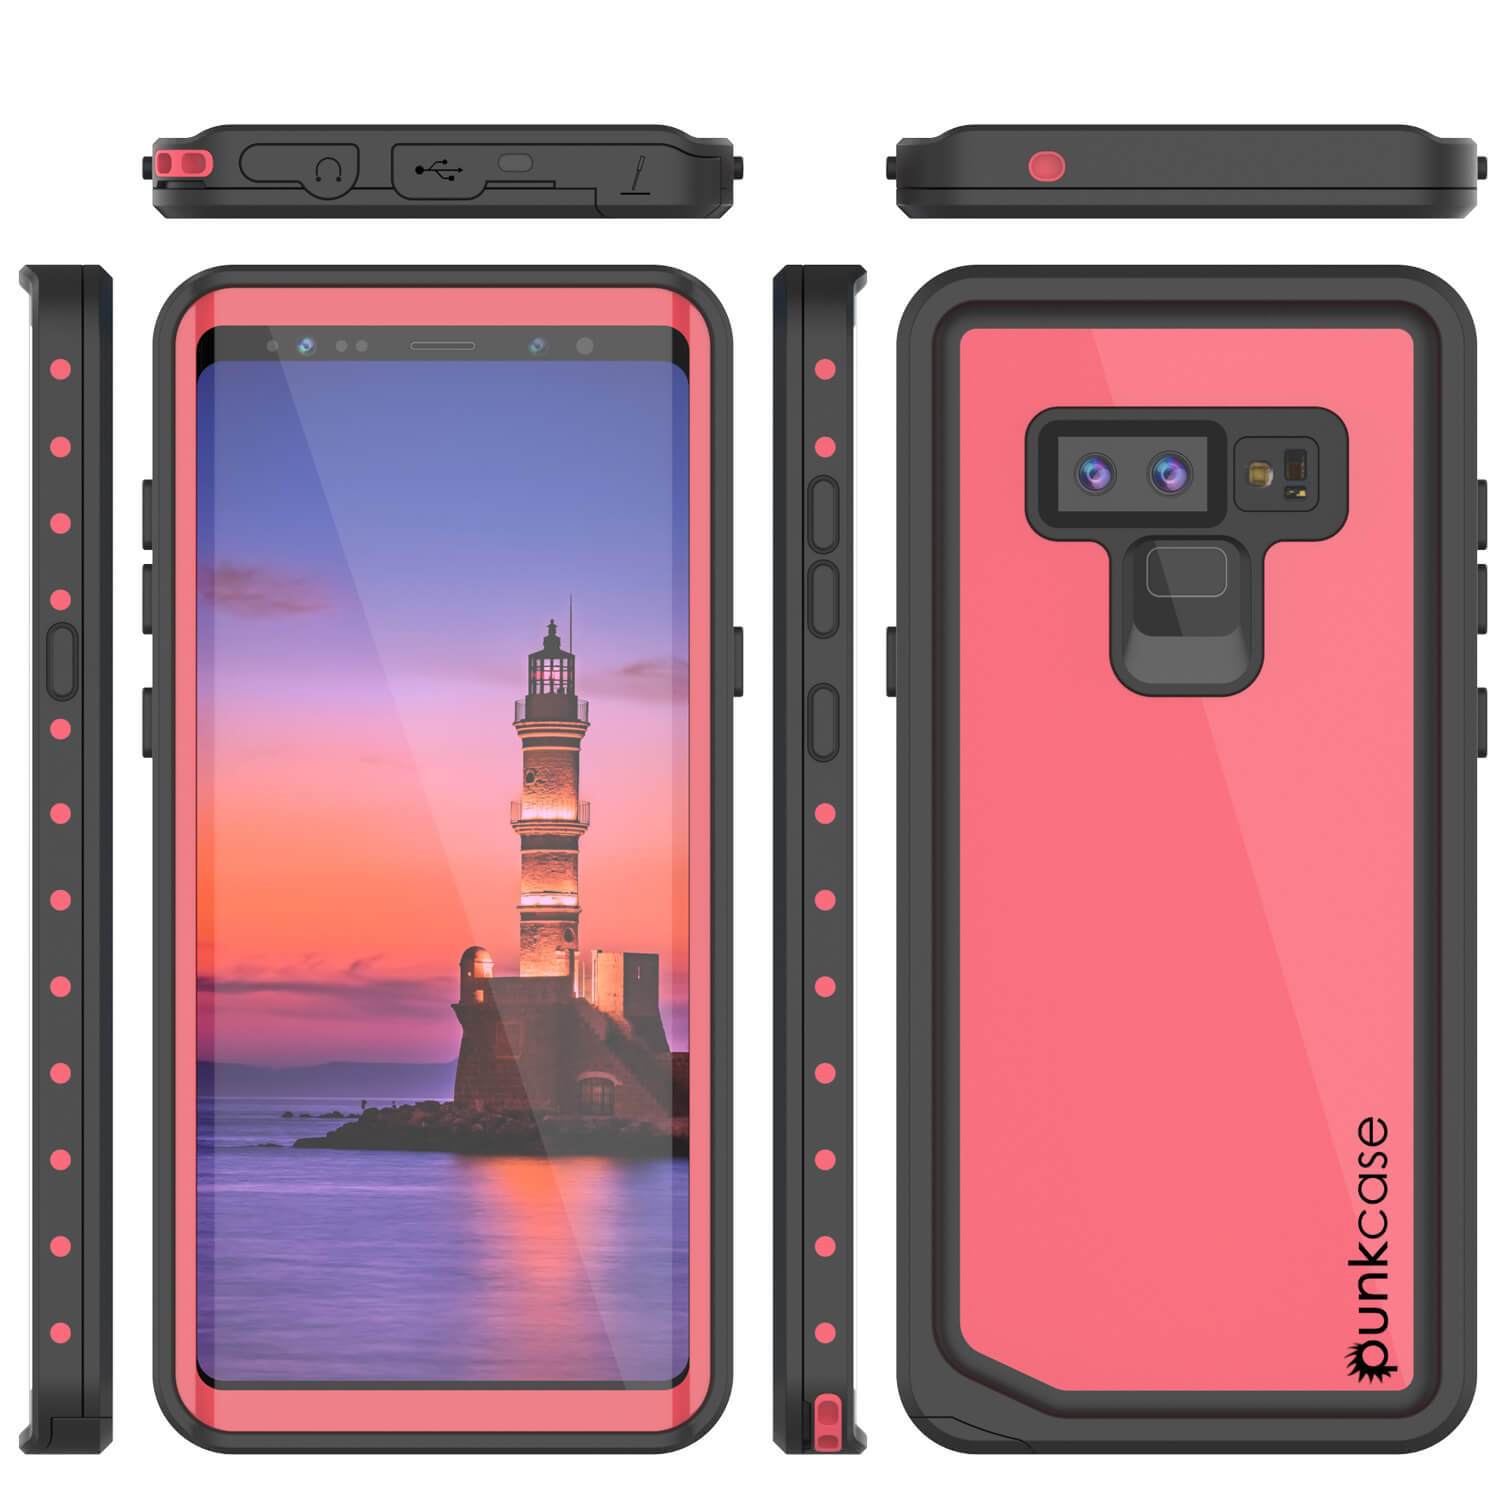 Galaxy Note 9 Waterproof Case PunkCase StudStar [Pink] Thin 6.6ft